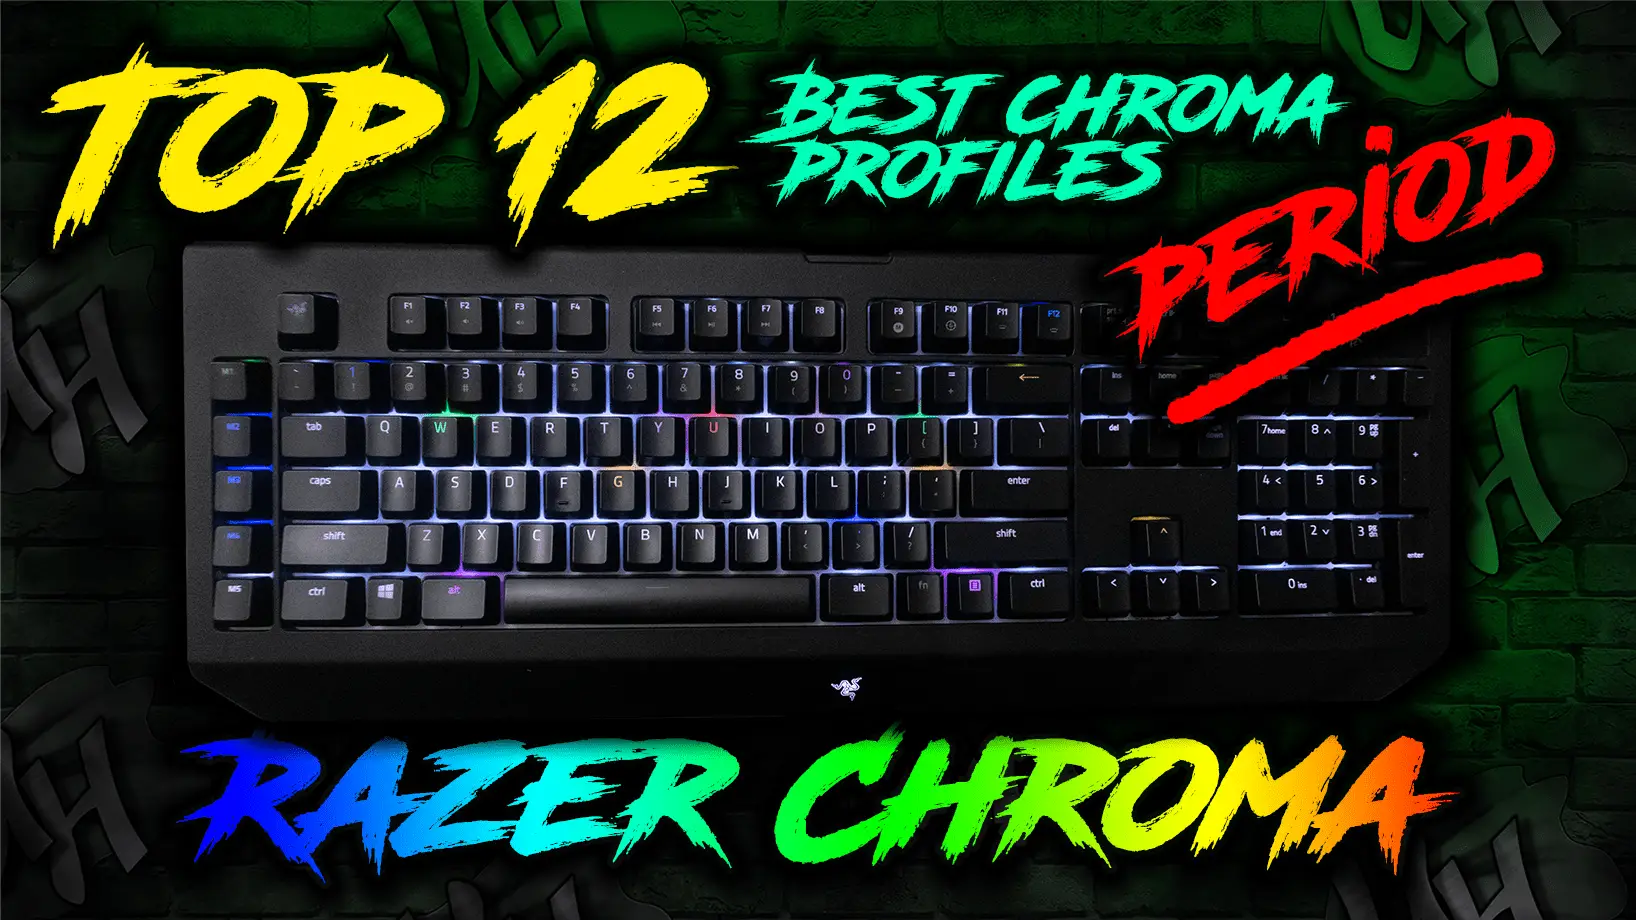 12 Best Chromas